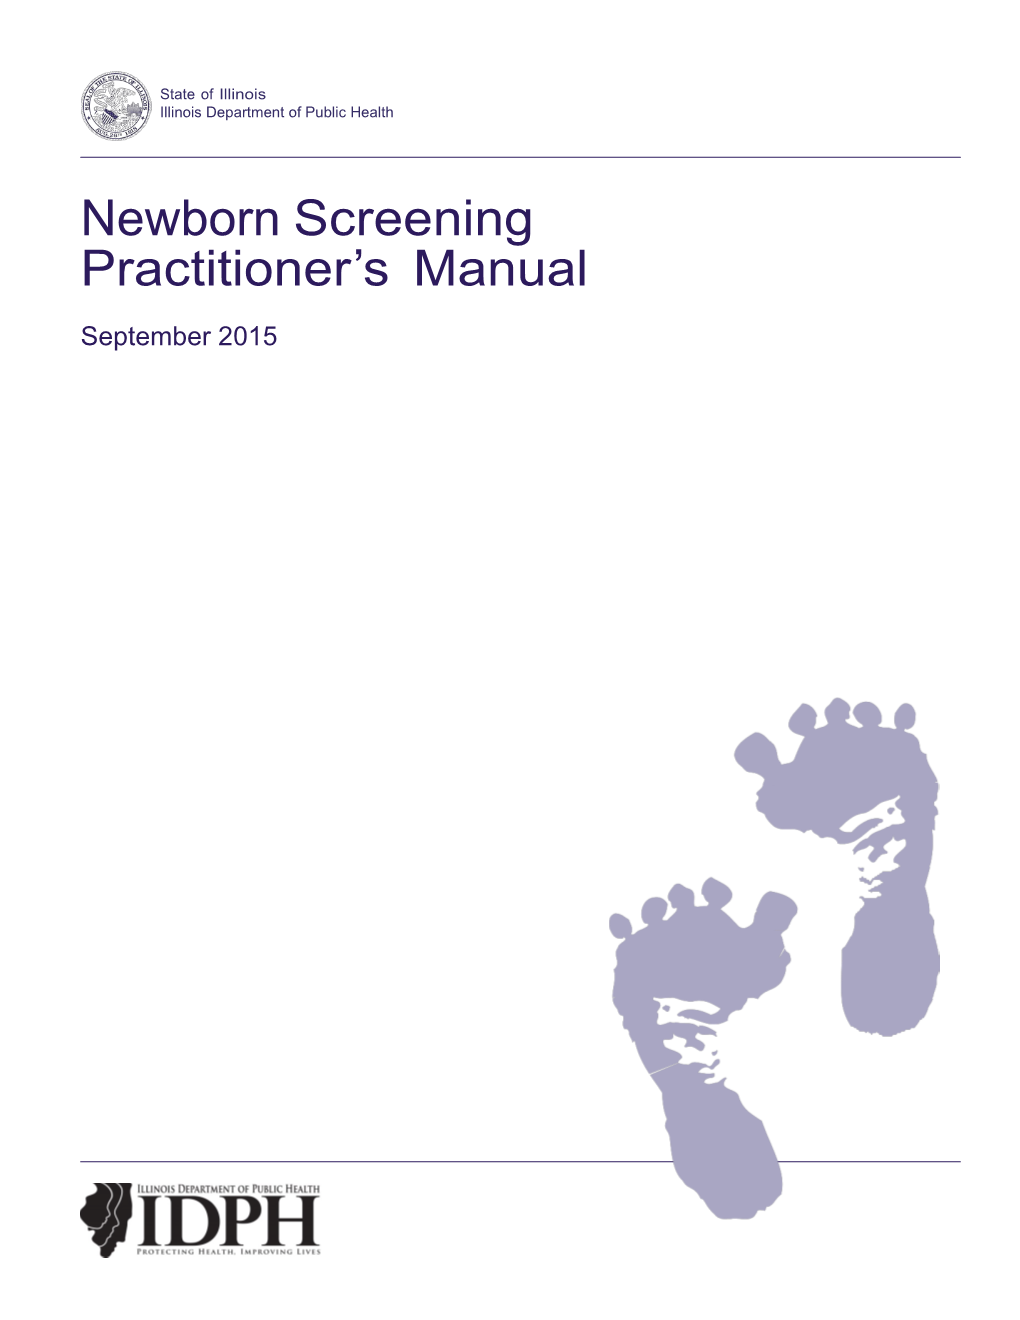 Newborn Screening Practitioner's Manual